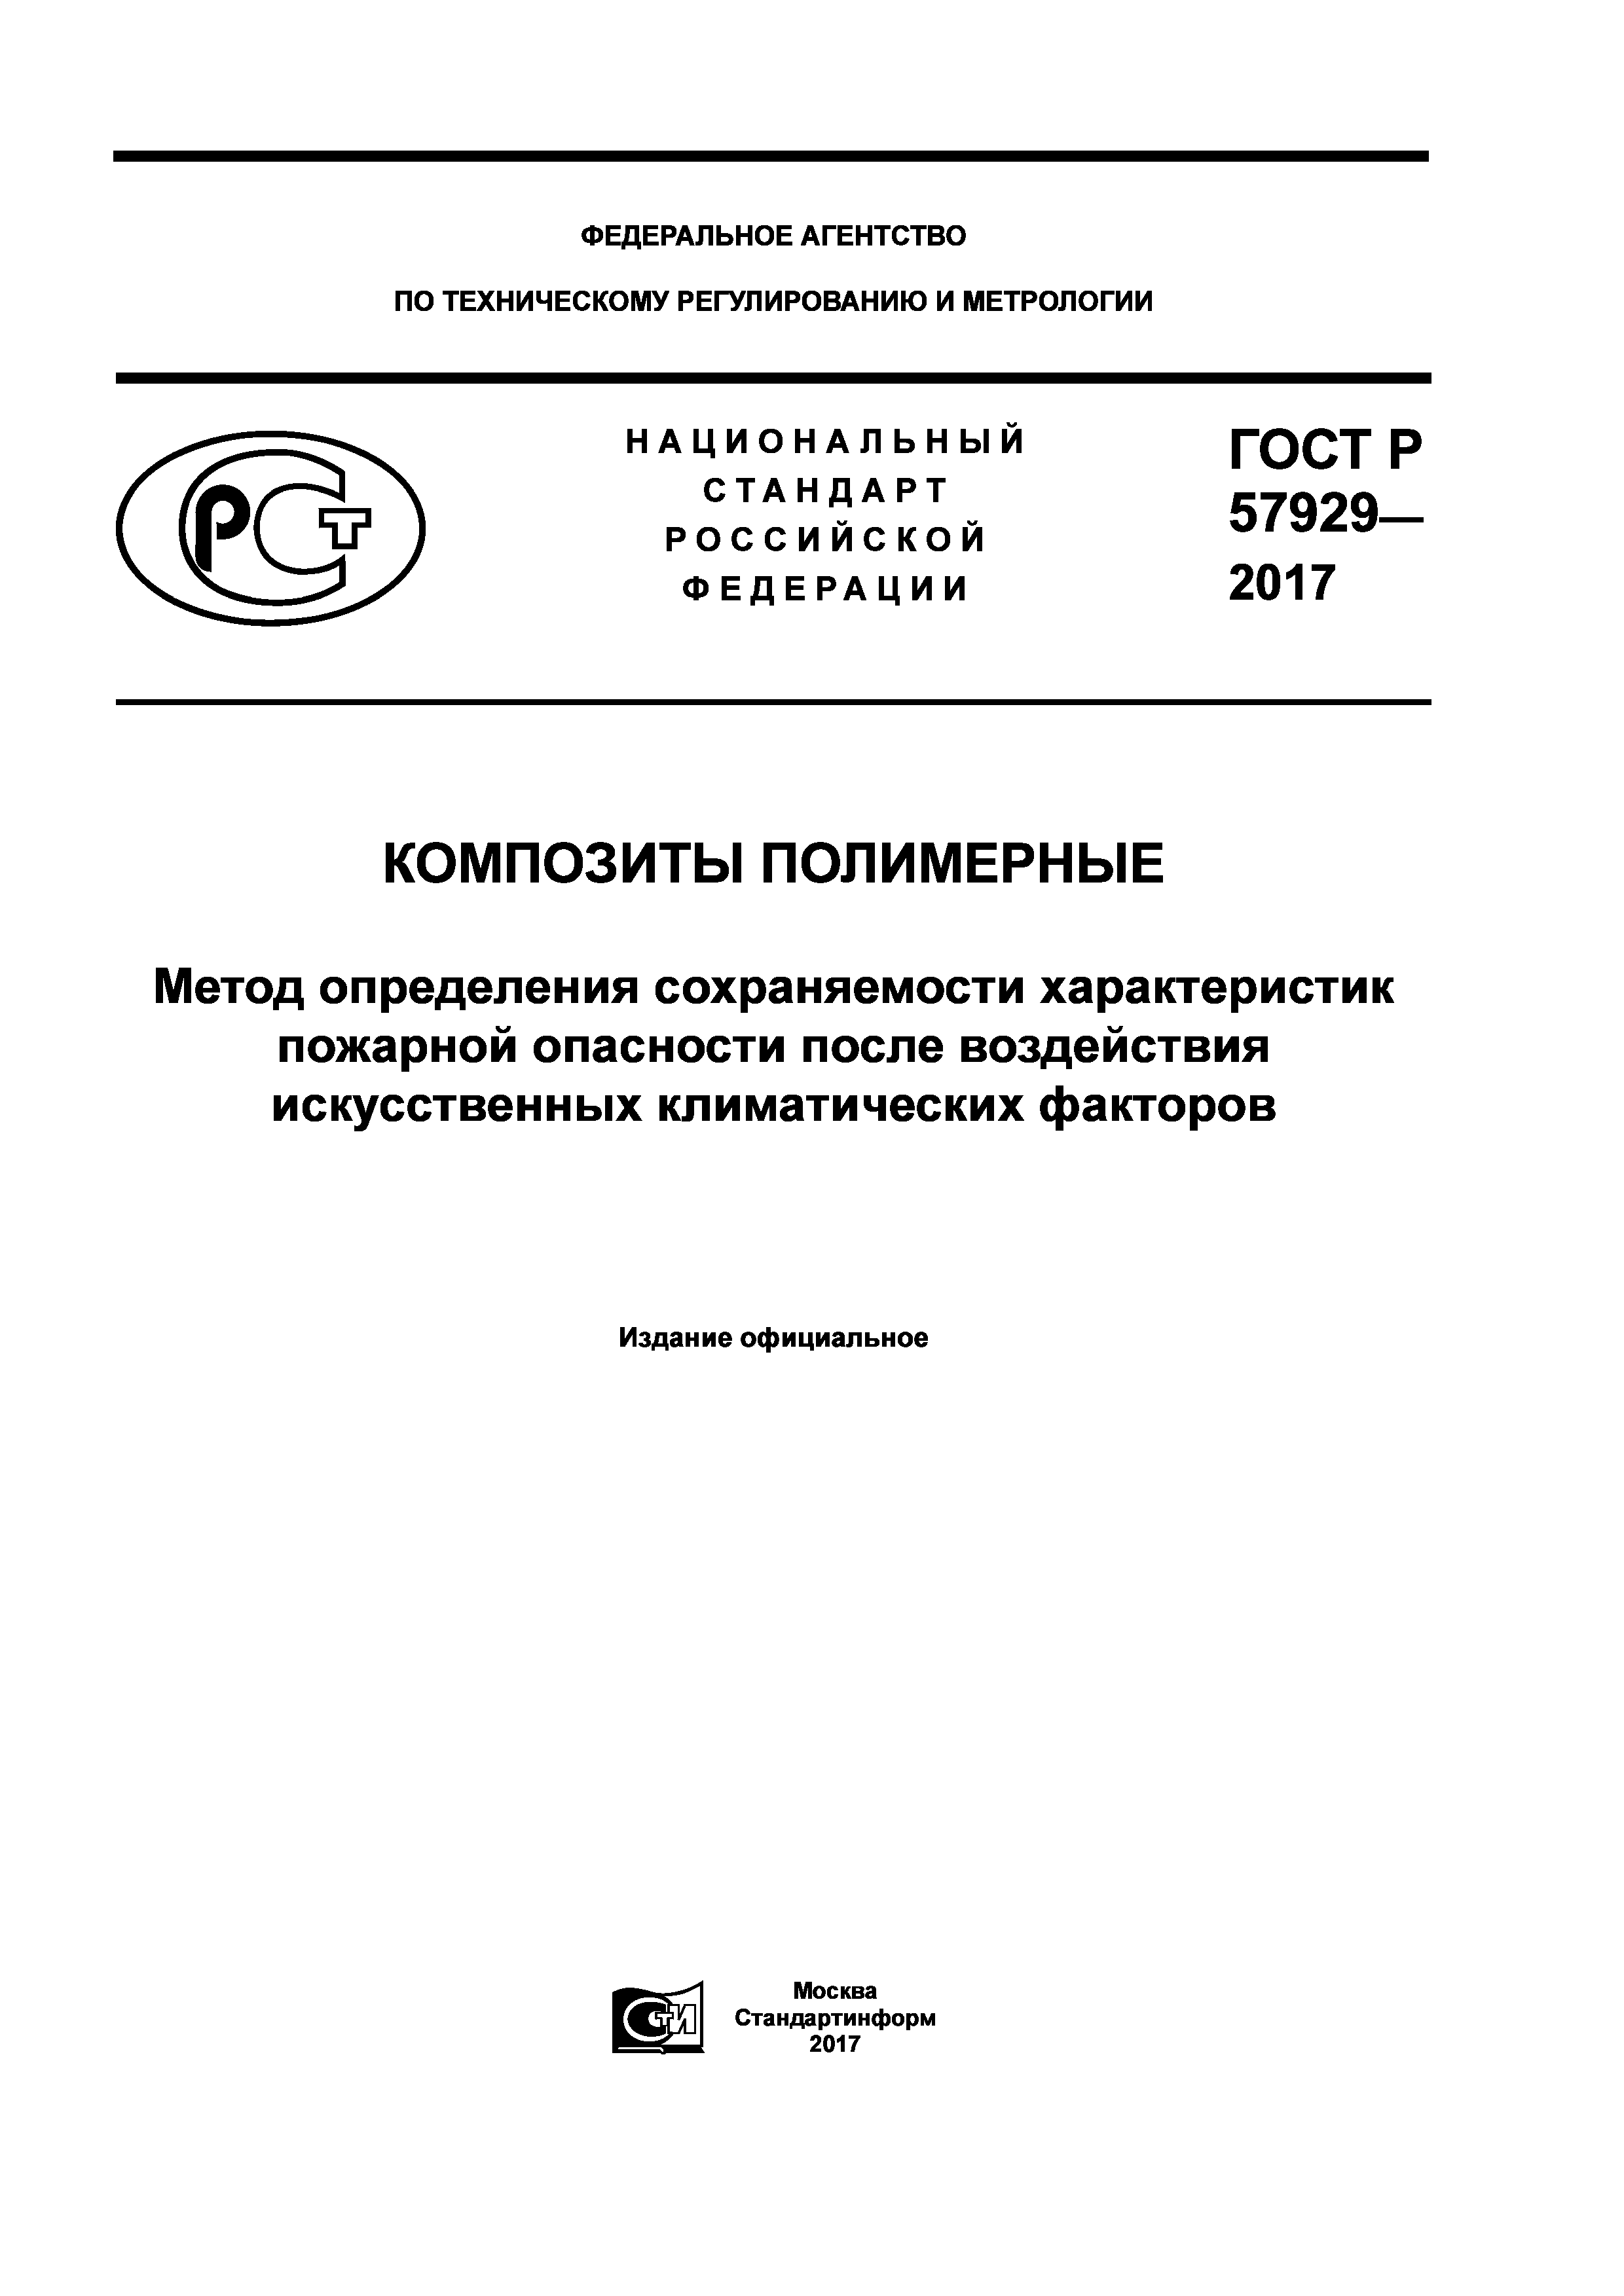 ГОСТ Р 57929-2017